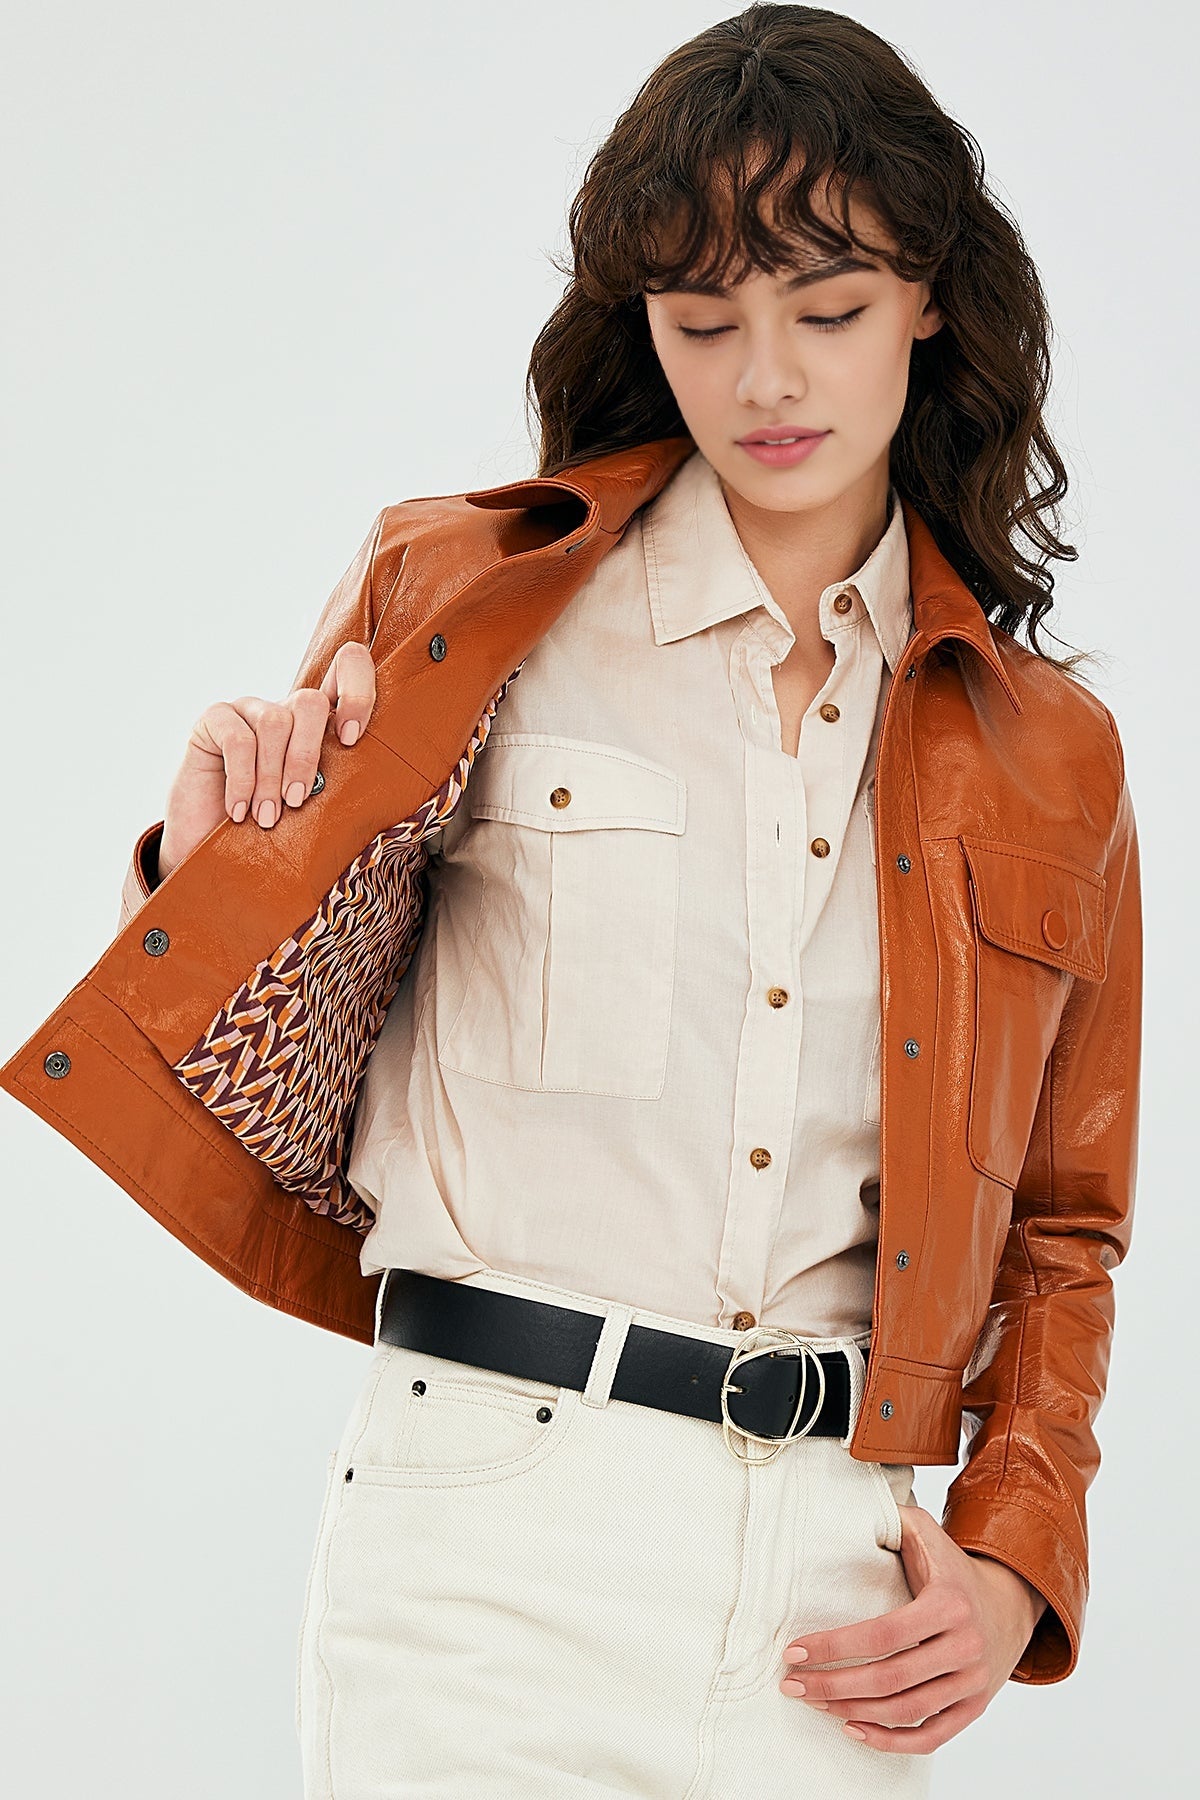 Emma Tile Women's Short Leather Jacket